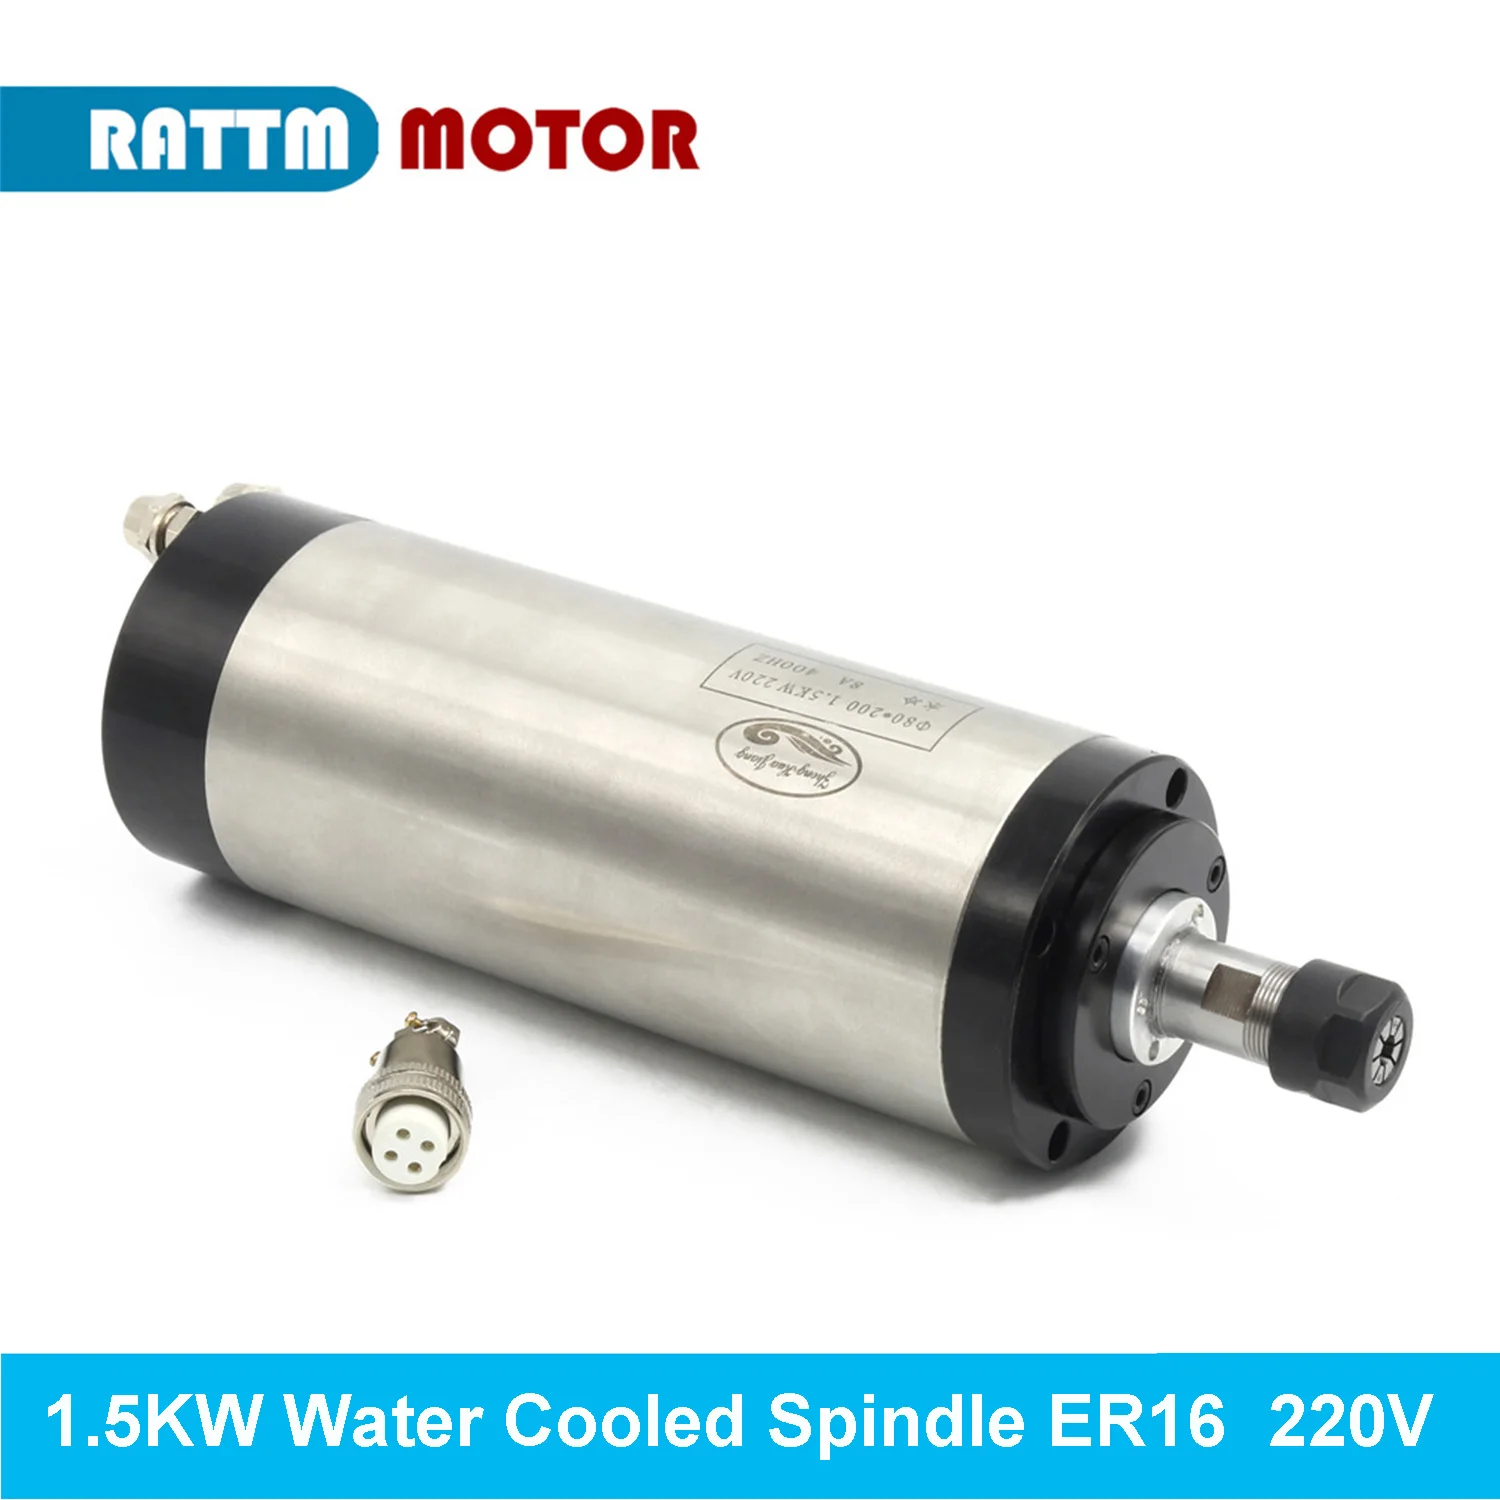 

1.5KW Water Cooled Spindle Motor Water Cooling Spindle ER16 220V 24000rpm 400Hz 4 Bearing for CNC Router Engraving Milling Grind